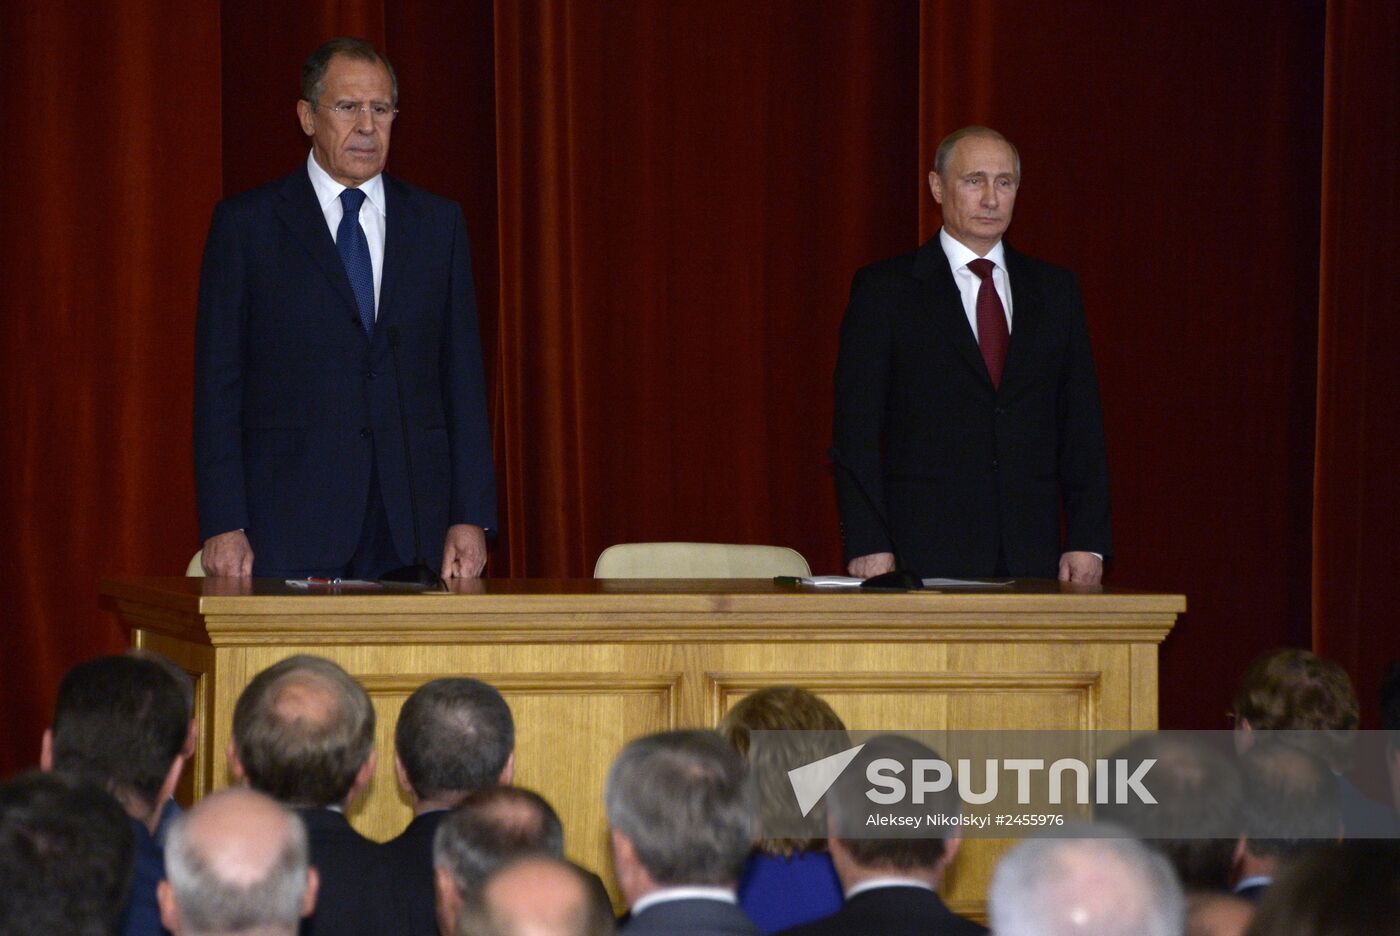 Vladimir Putin meets with Russian ambassadors